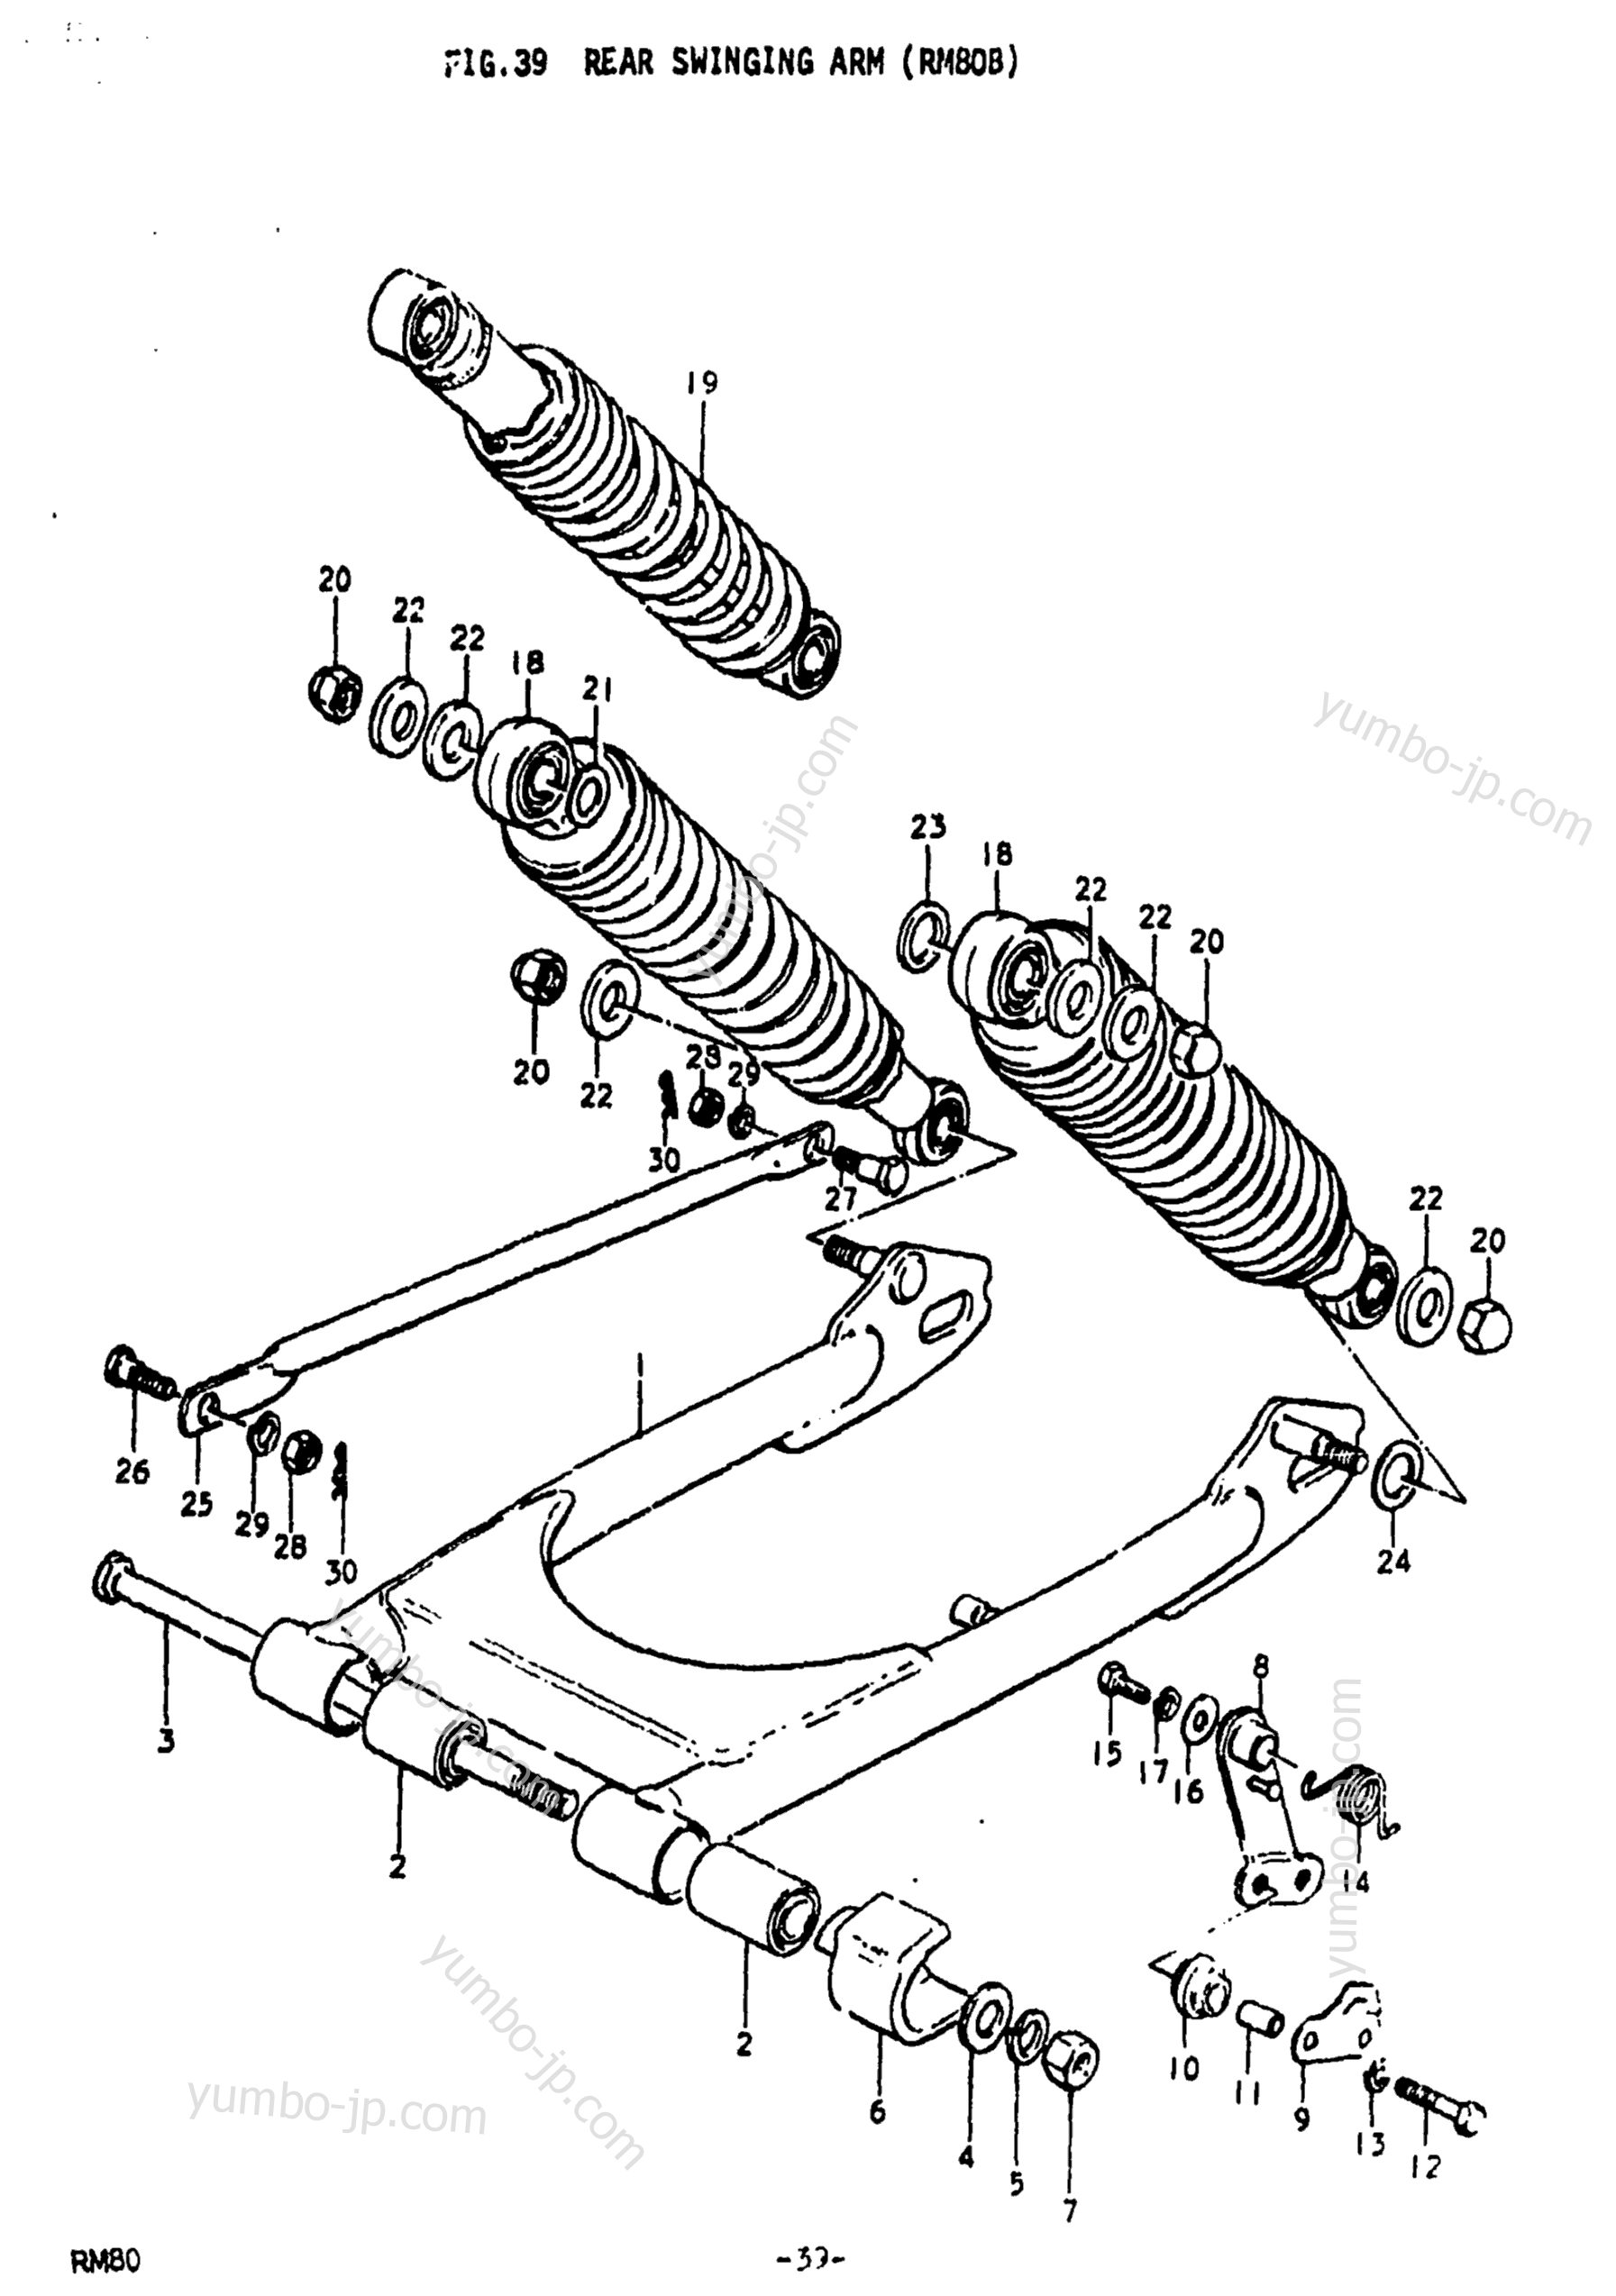 REAR SWINGING ARM (RM80B) for motorcycles SUZUKI RM80 1978 year